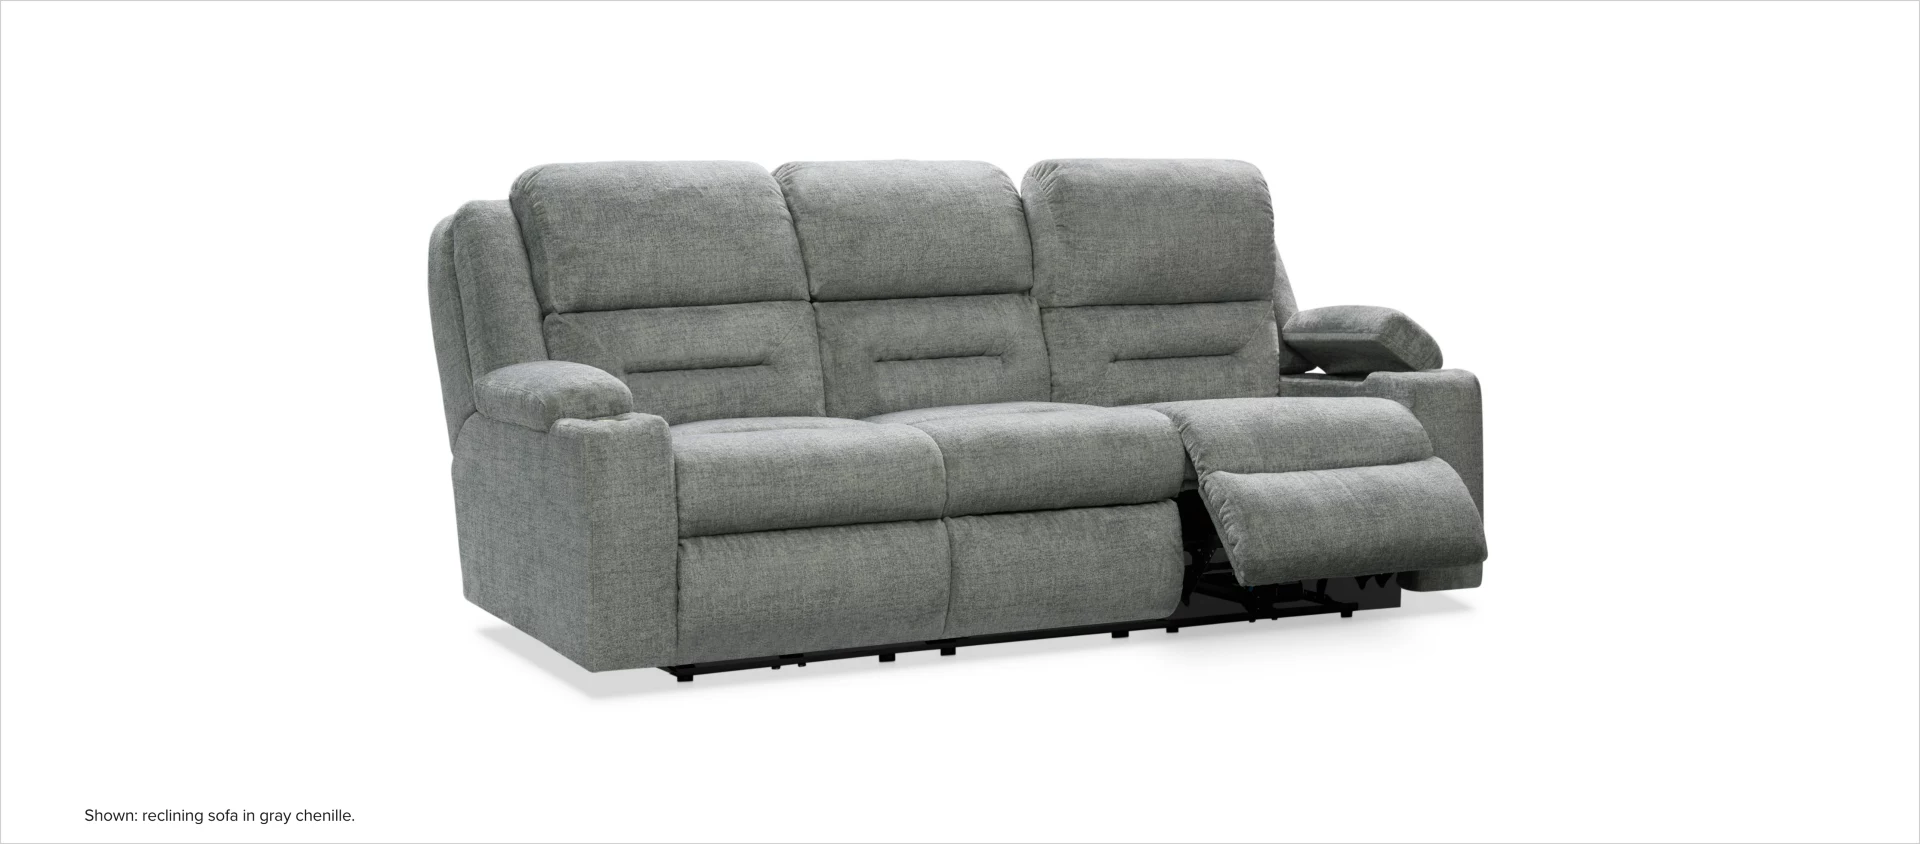 Concourse reclining sofa in gray chenille.